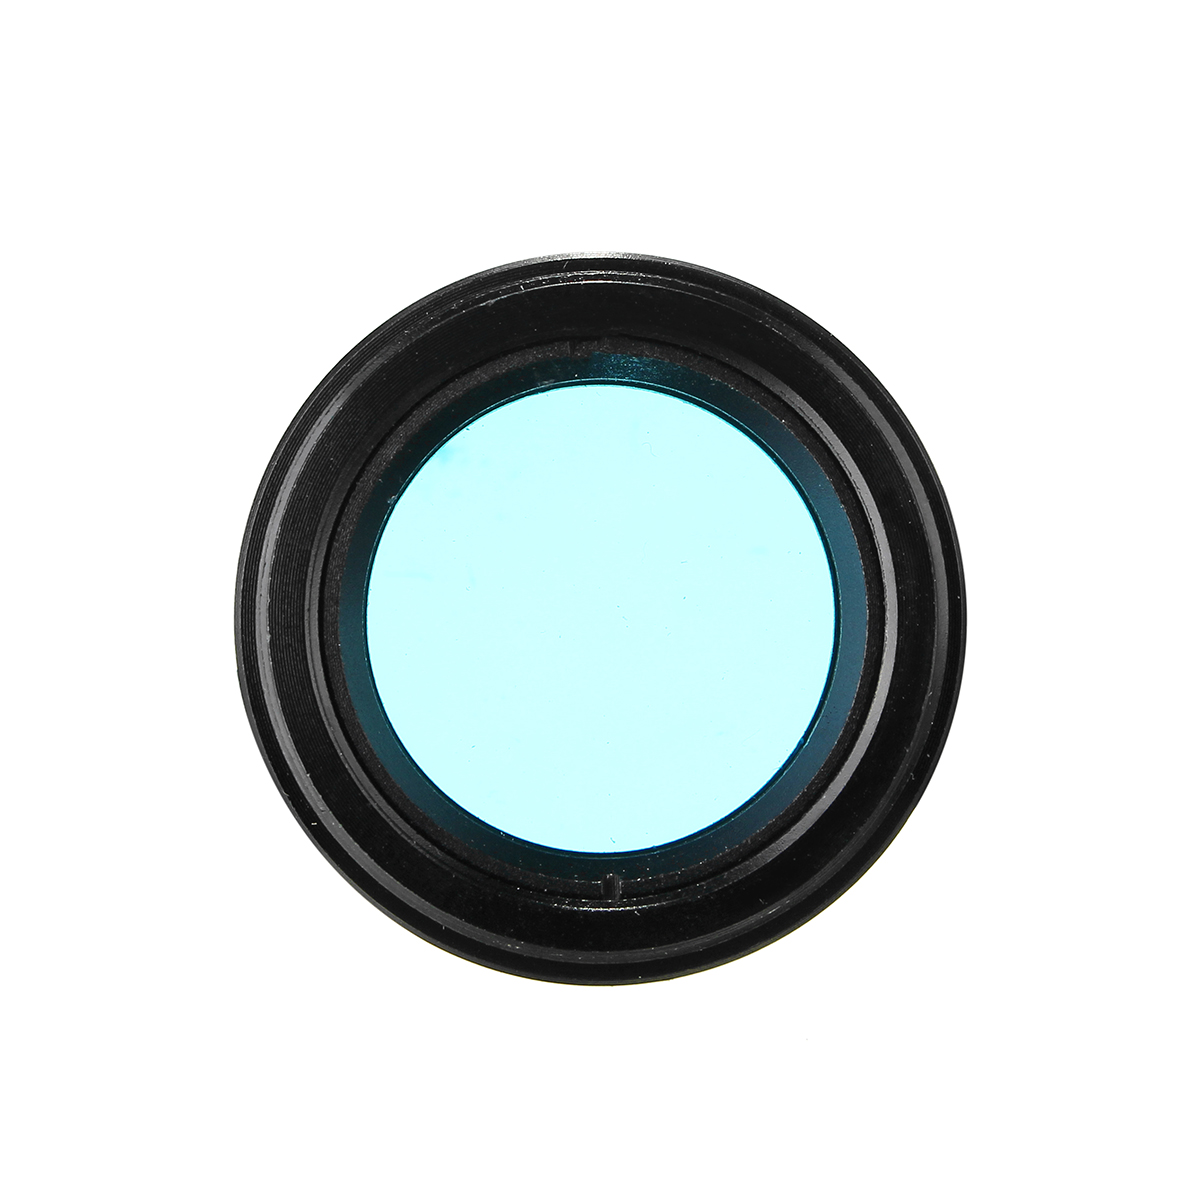 8Pcsset--125inch-Lens-Filter-Kit-Nebula-Filter-Moon-Sun-Filter-For-Telescope-Eyepiece-Accessories-1412189-10